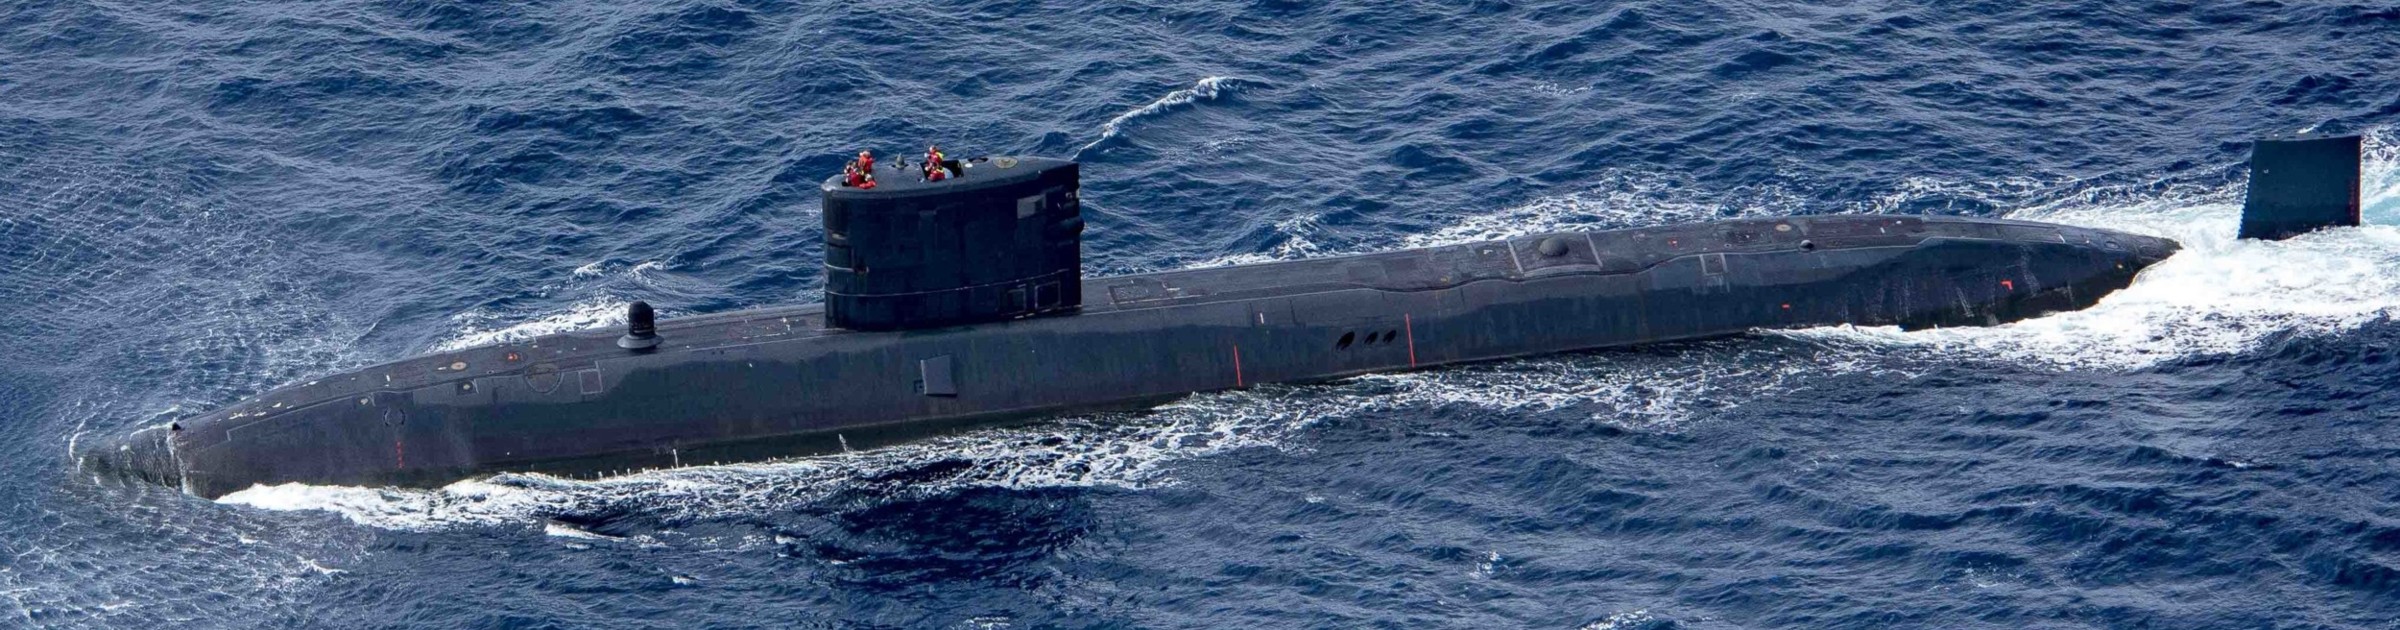 hms trenchant s-91 trafalgar class attack submarine royal navy 06